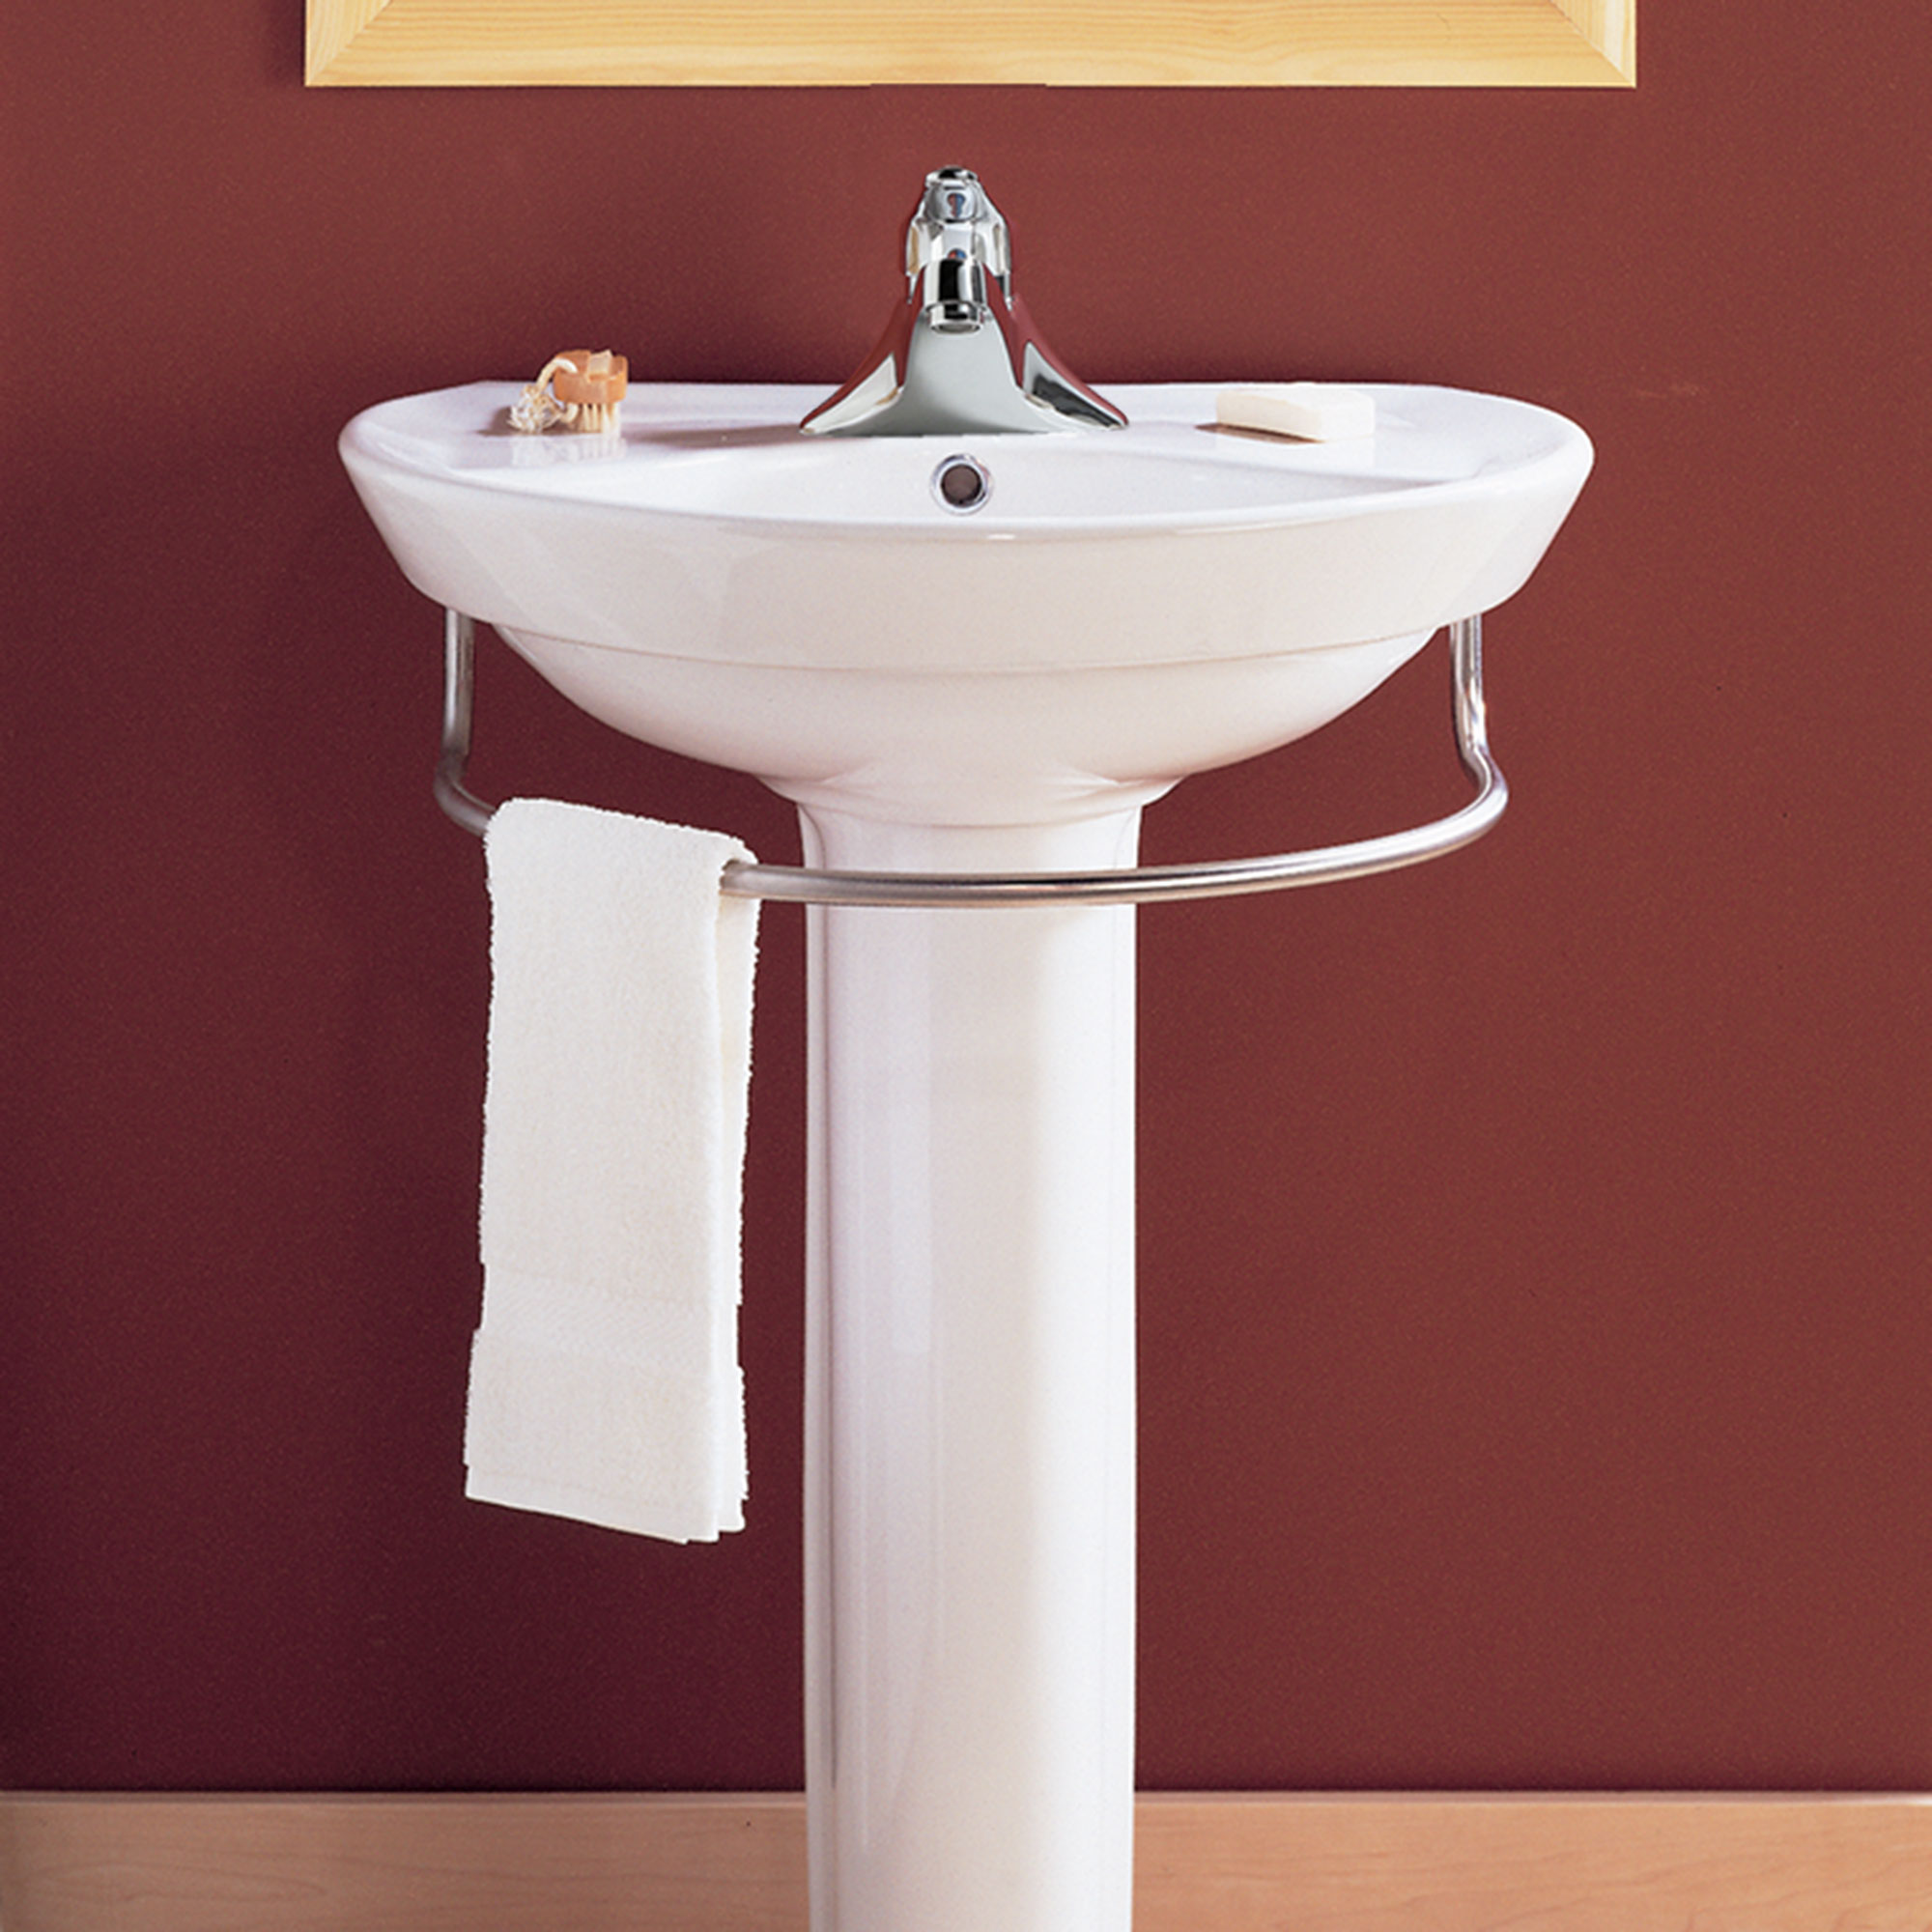 Ravenna™ 4-Inch Centerset Pedestal Sink Top and Leg Combination